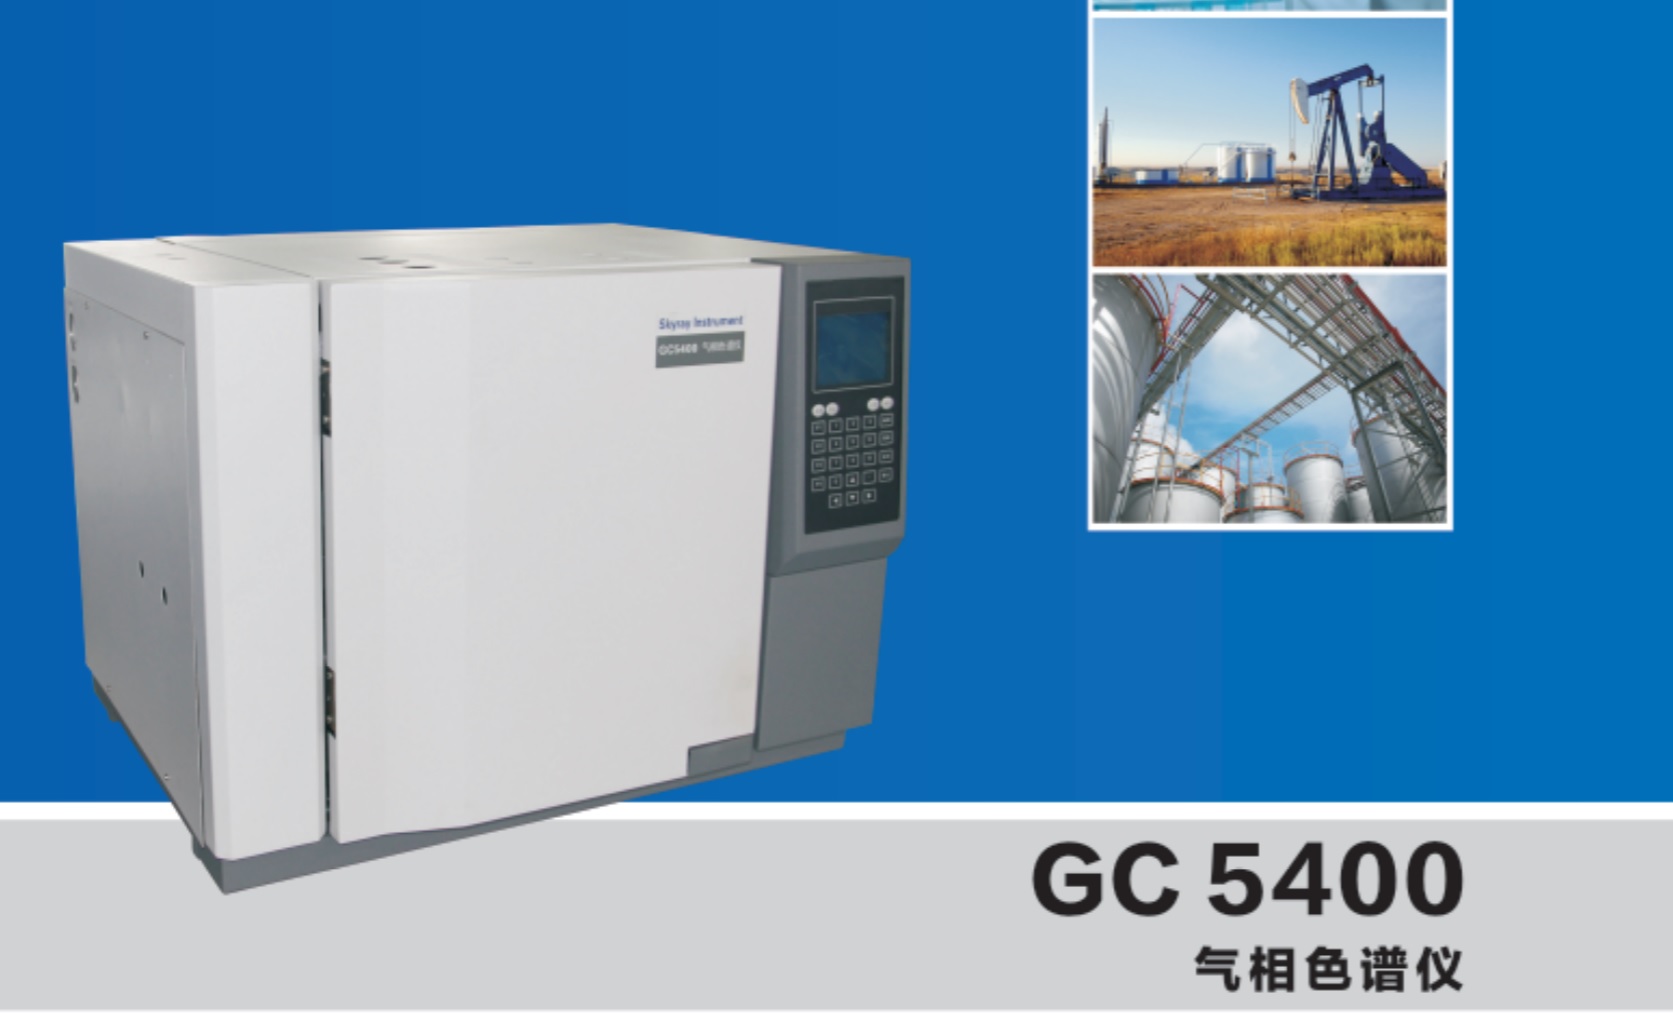 Jiangsu Skyray Instrument Co., Ltd.-Gas chromatograph GC5400